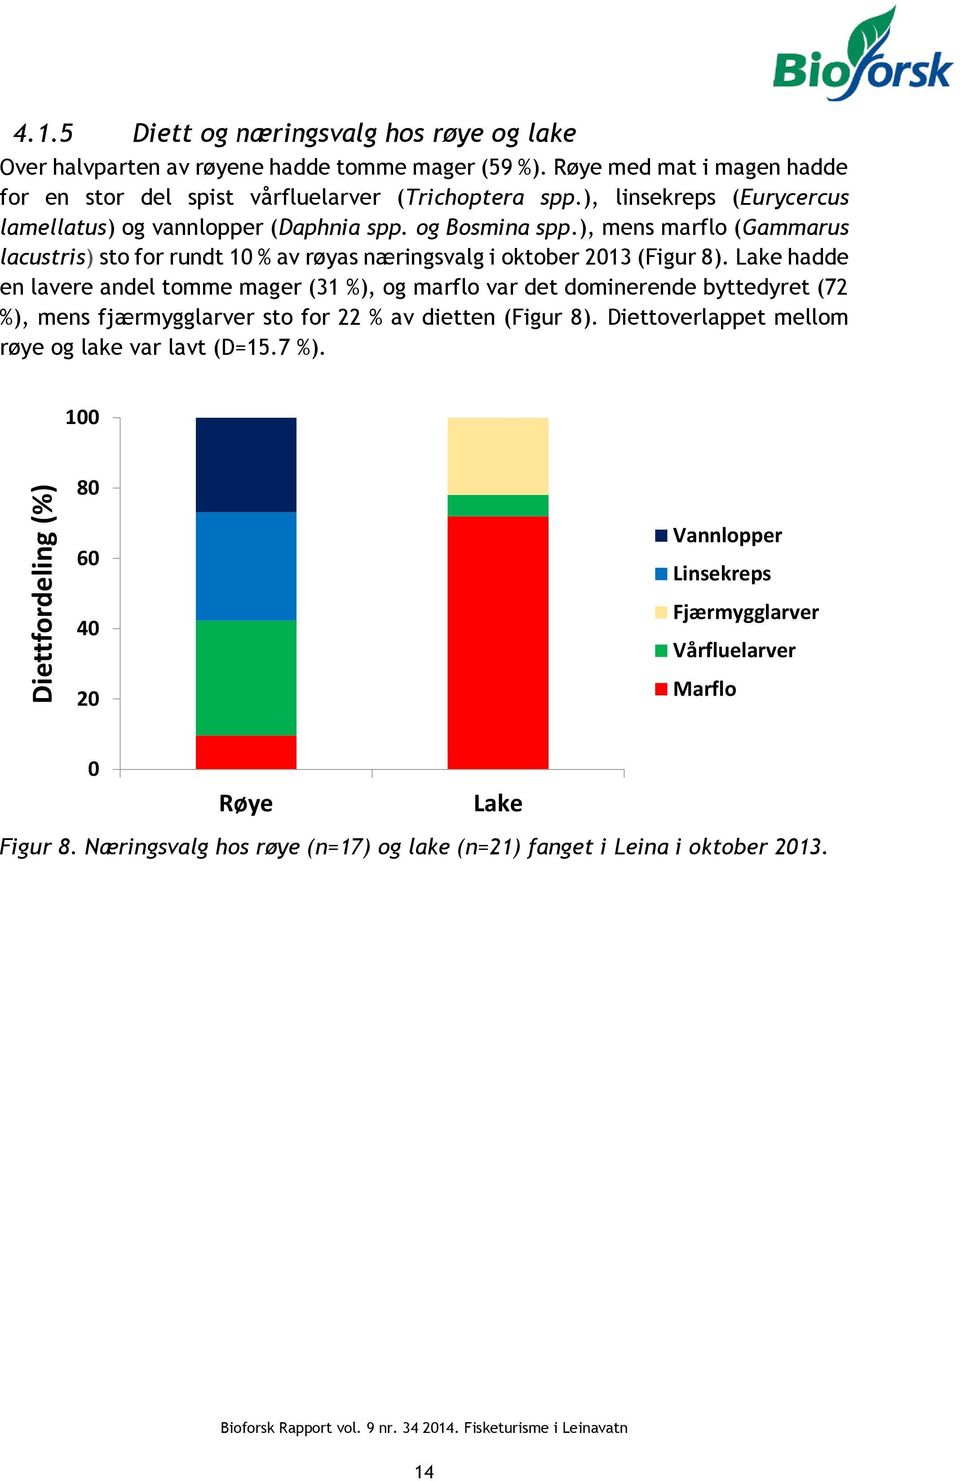 ), mens marflo (Gammarus lacustris) sto for rundt 10 % av røyas næringsvalg i oktober 2013 (Figur 8).